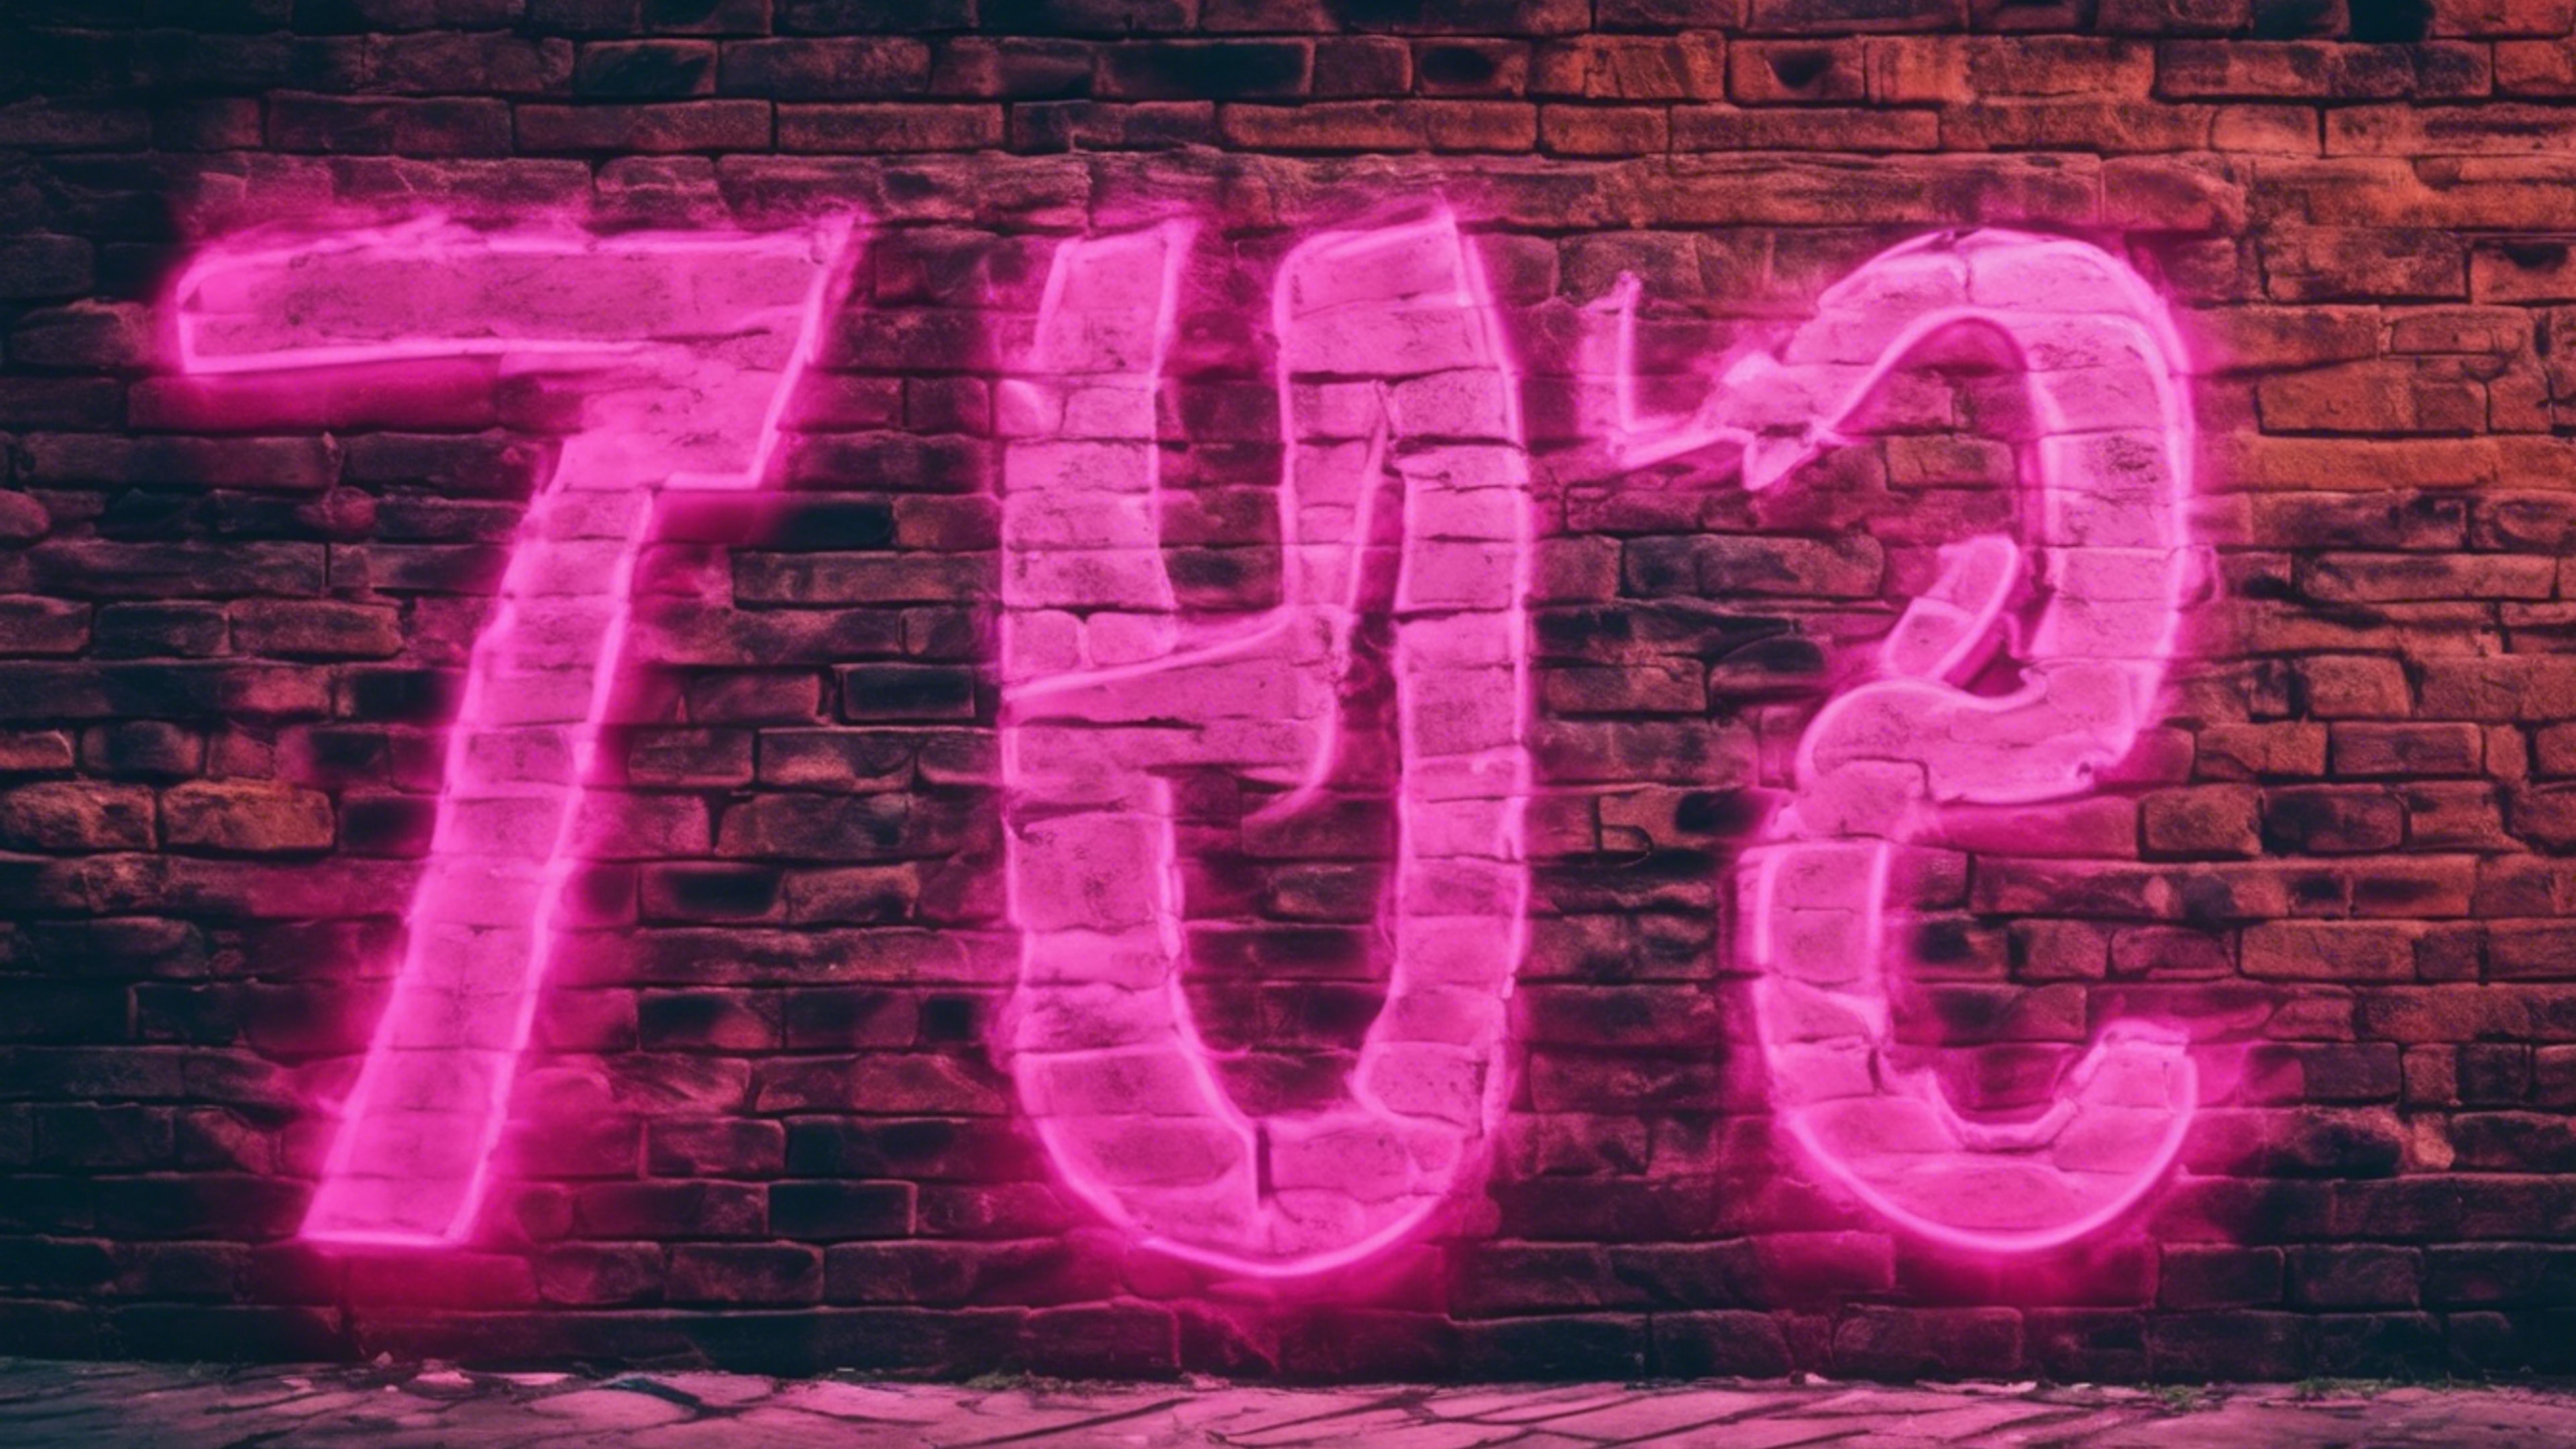 A bright neon pink graffiti on an old brick wall in an urban setting. Tapeta[f64c7f440a704c87afc0]